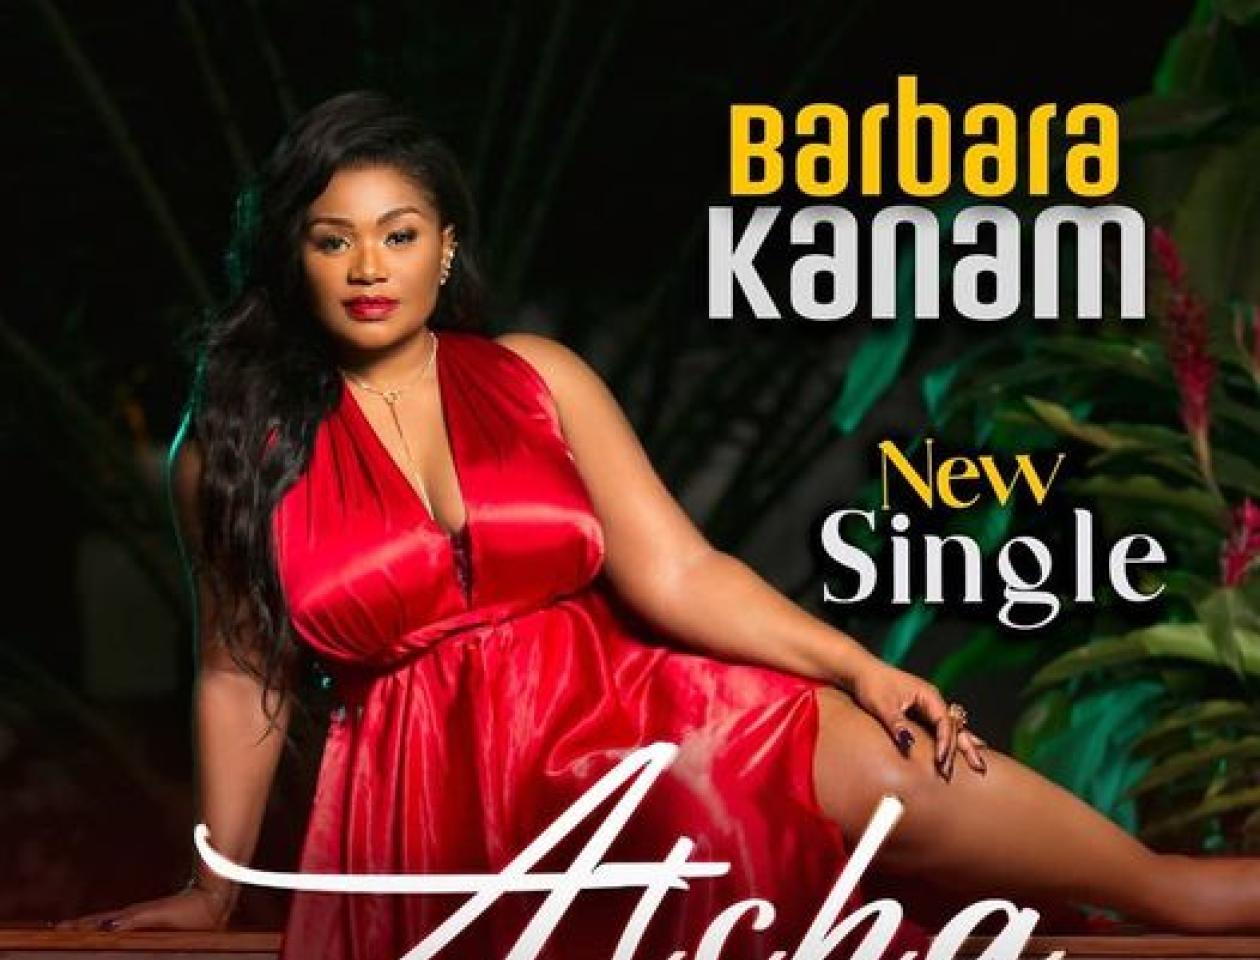 L'affiche du single "Atcha" de Barbara Kanam